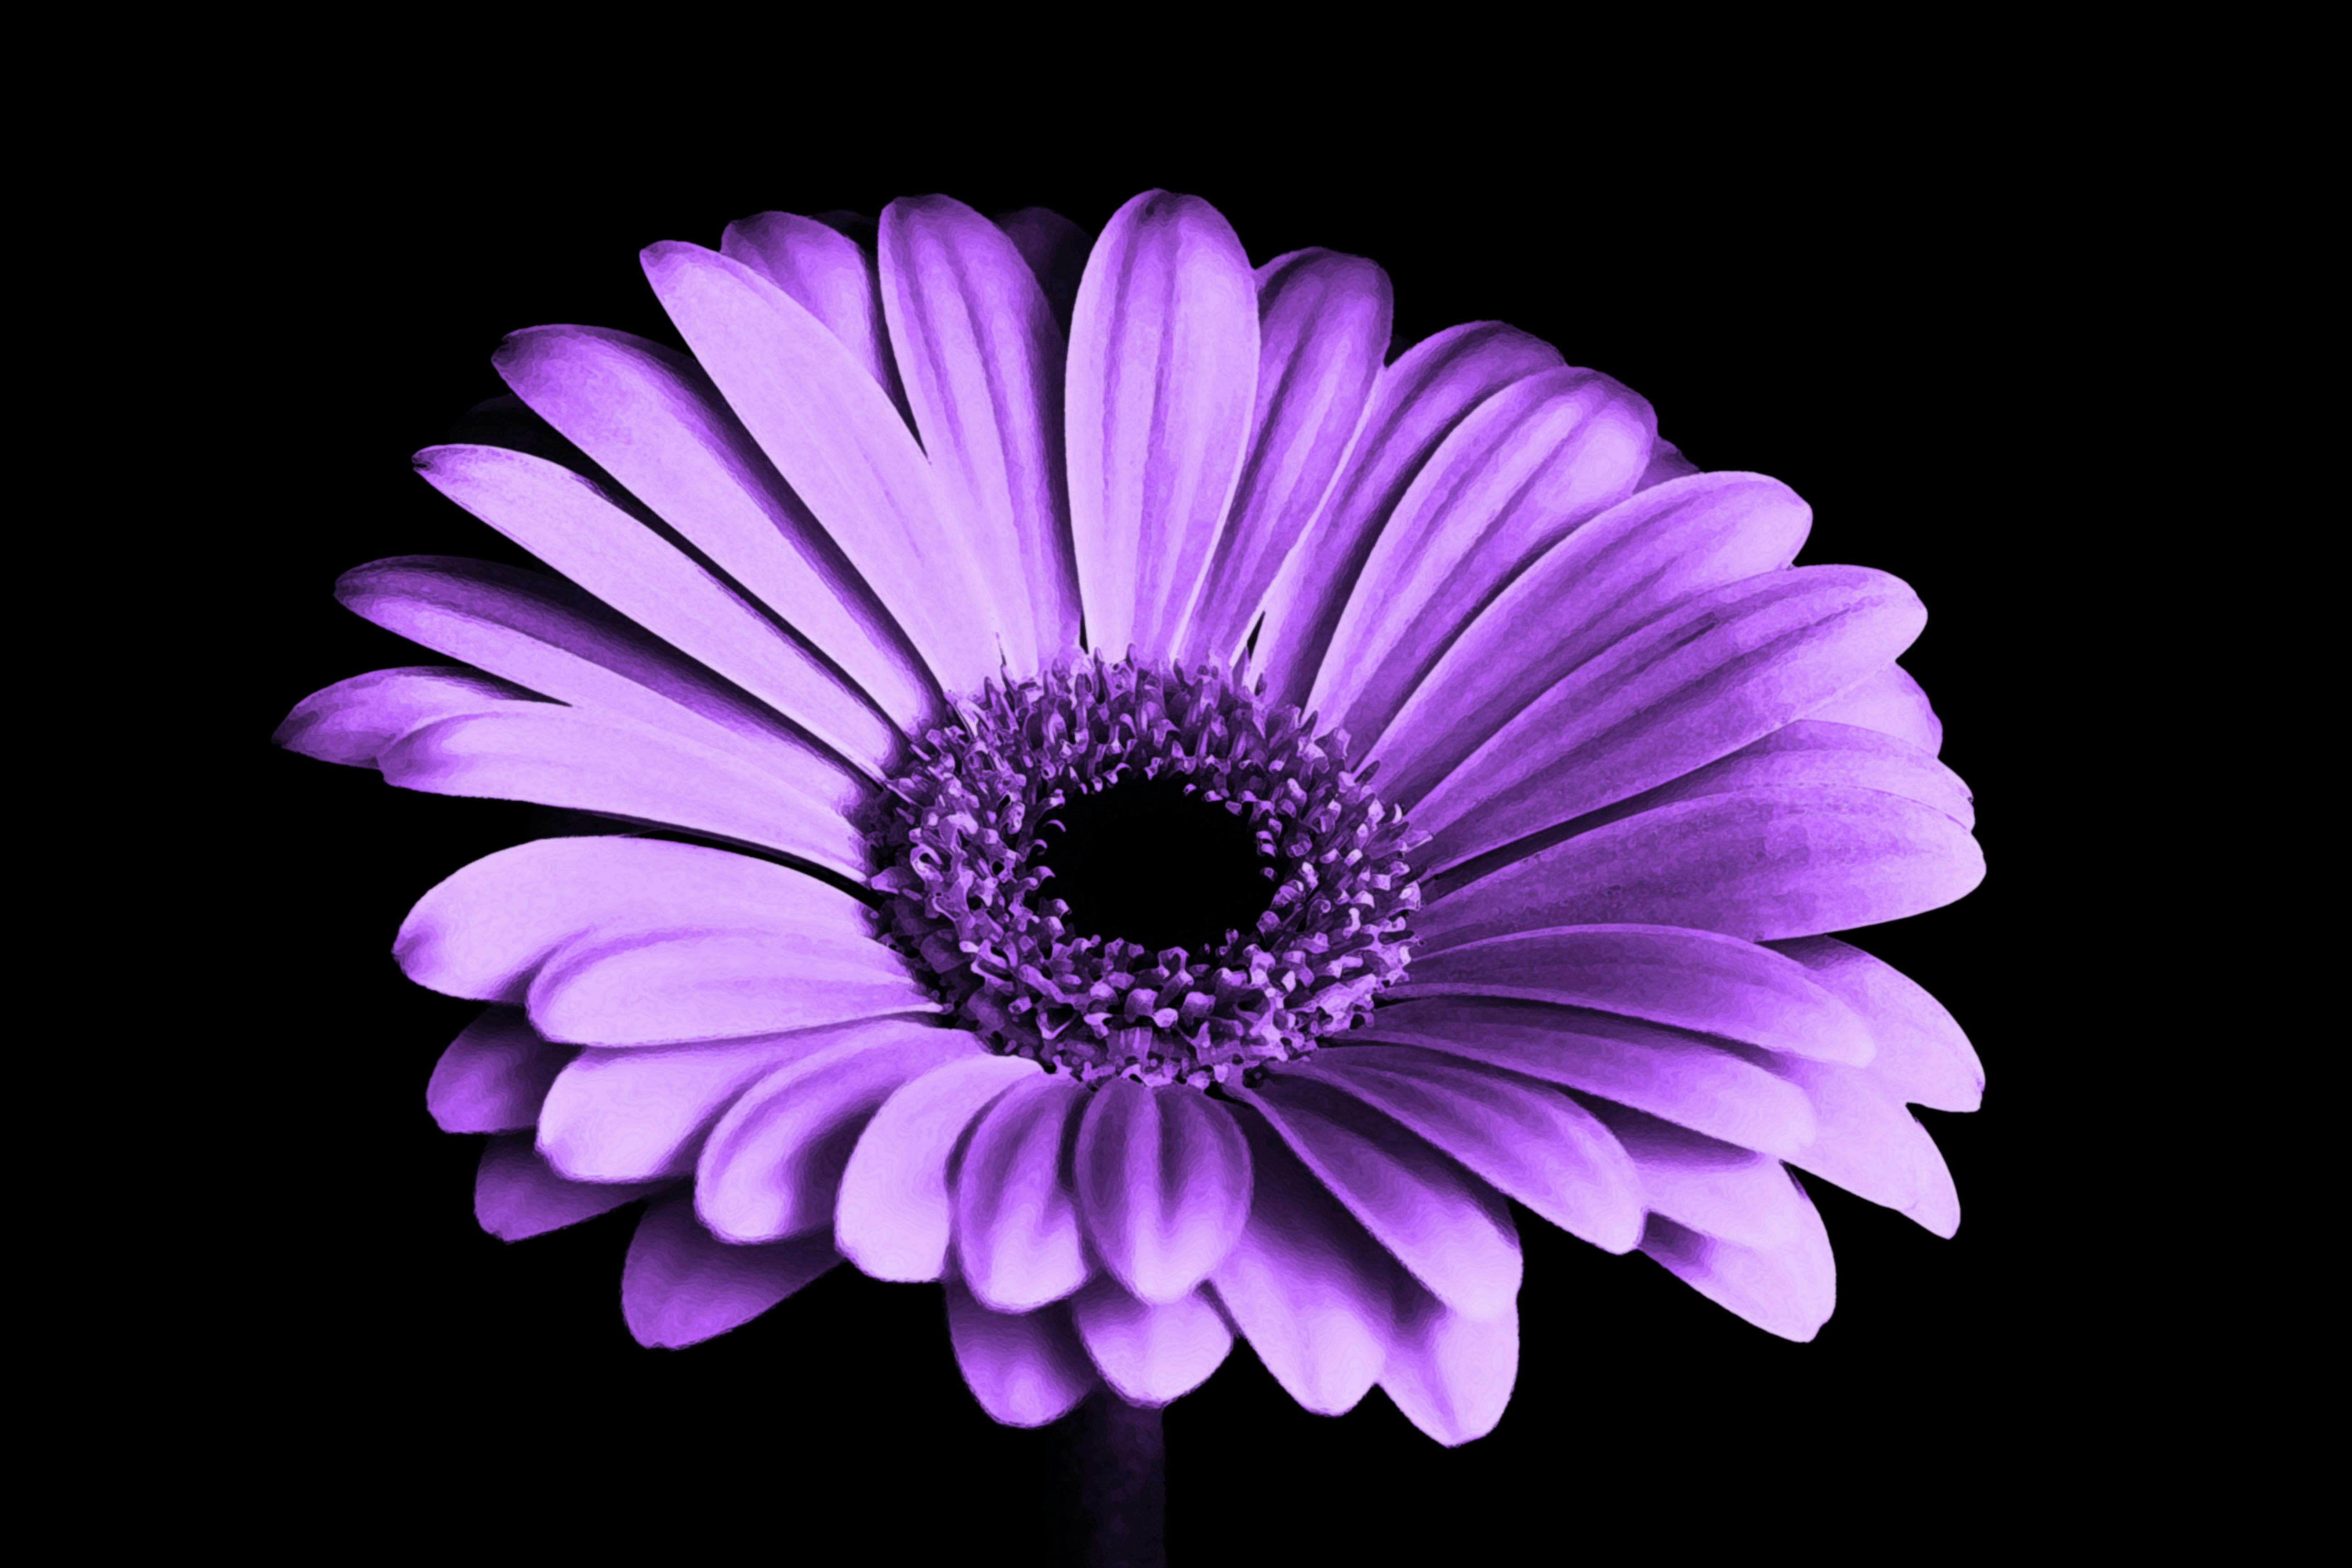 Single Flower Nature Wallpaper - Free photo on Pixabay - Pixabay